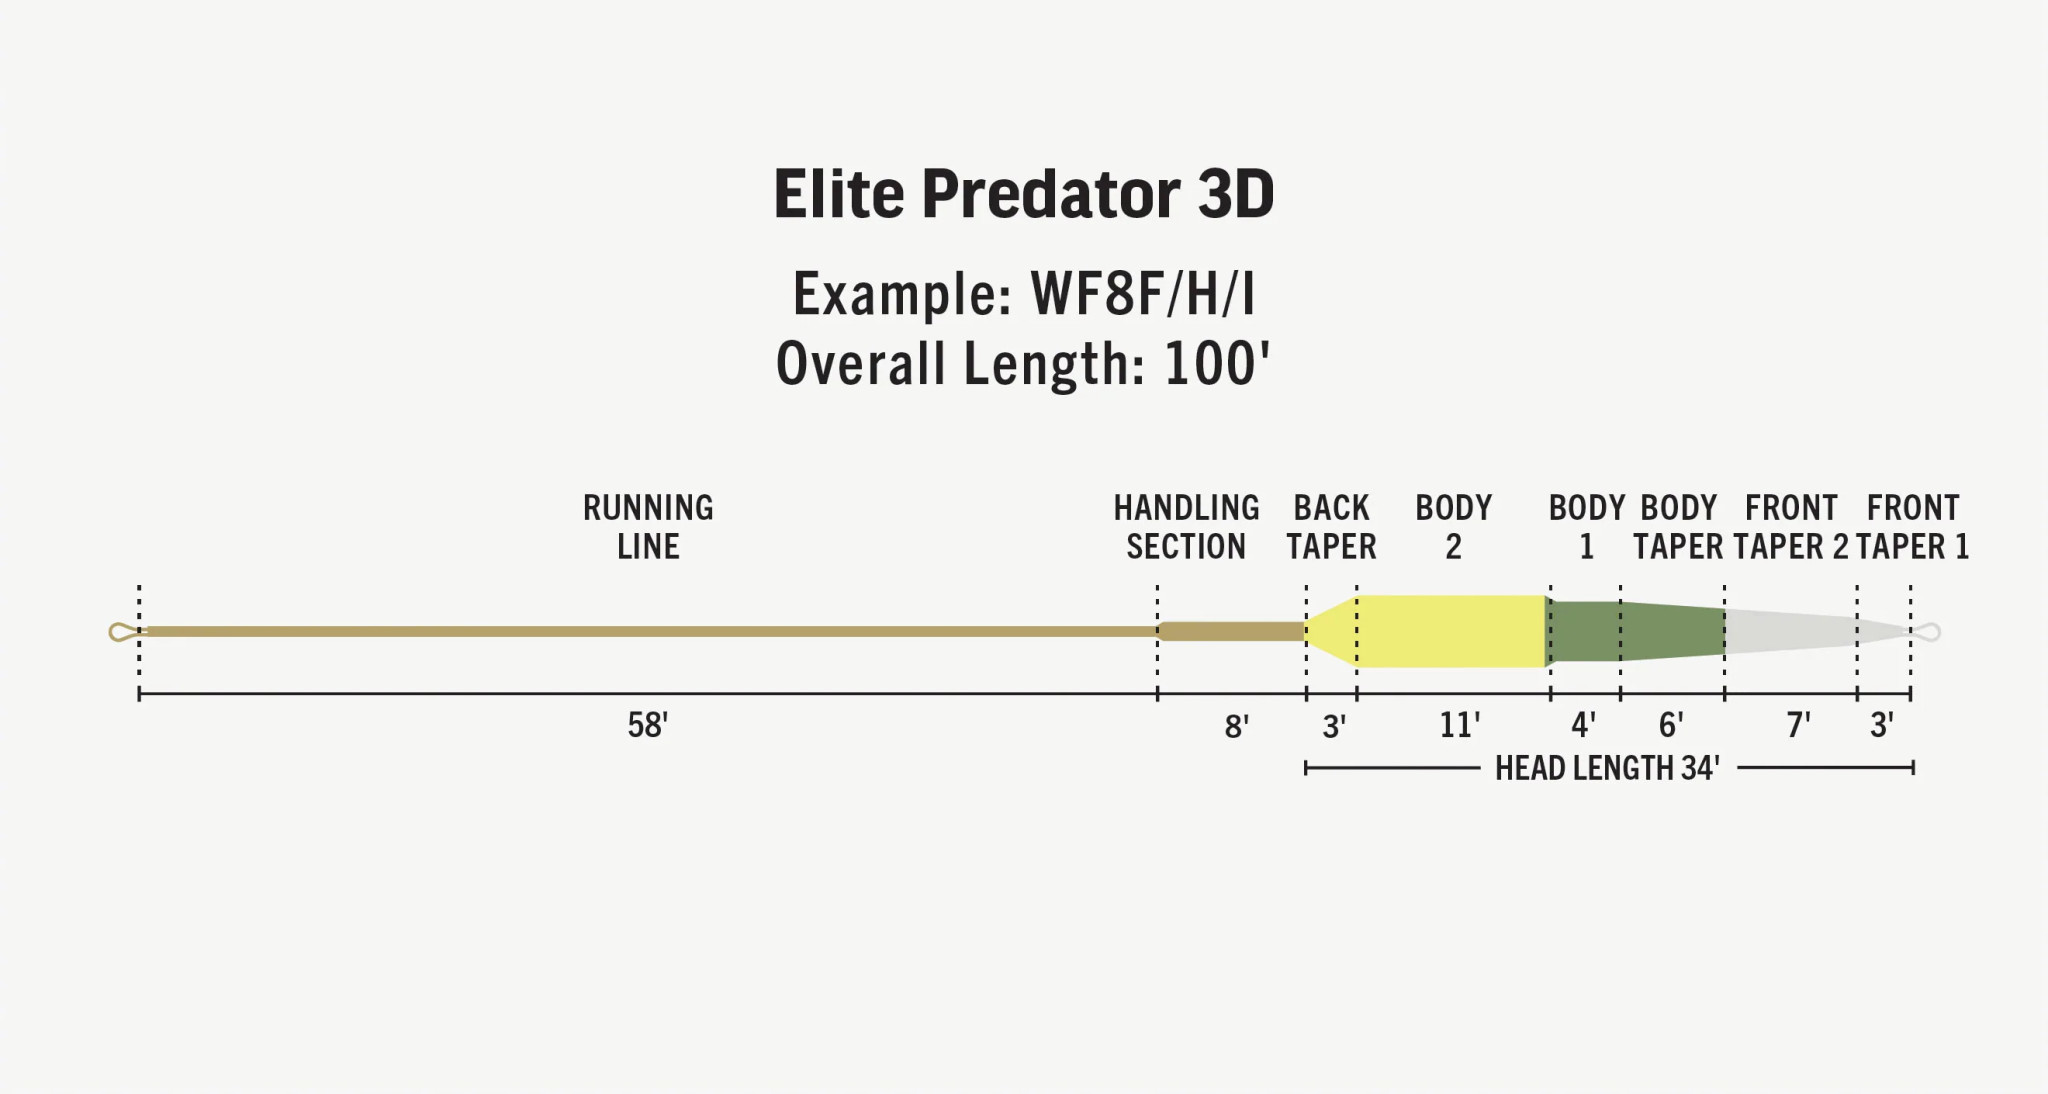 Rio RIO Elite Predator Sink Tip Fly Line